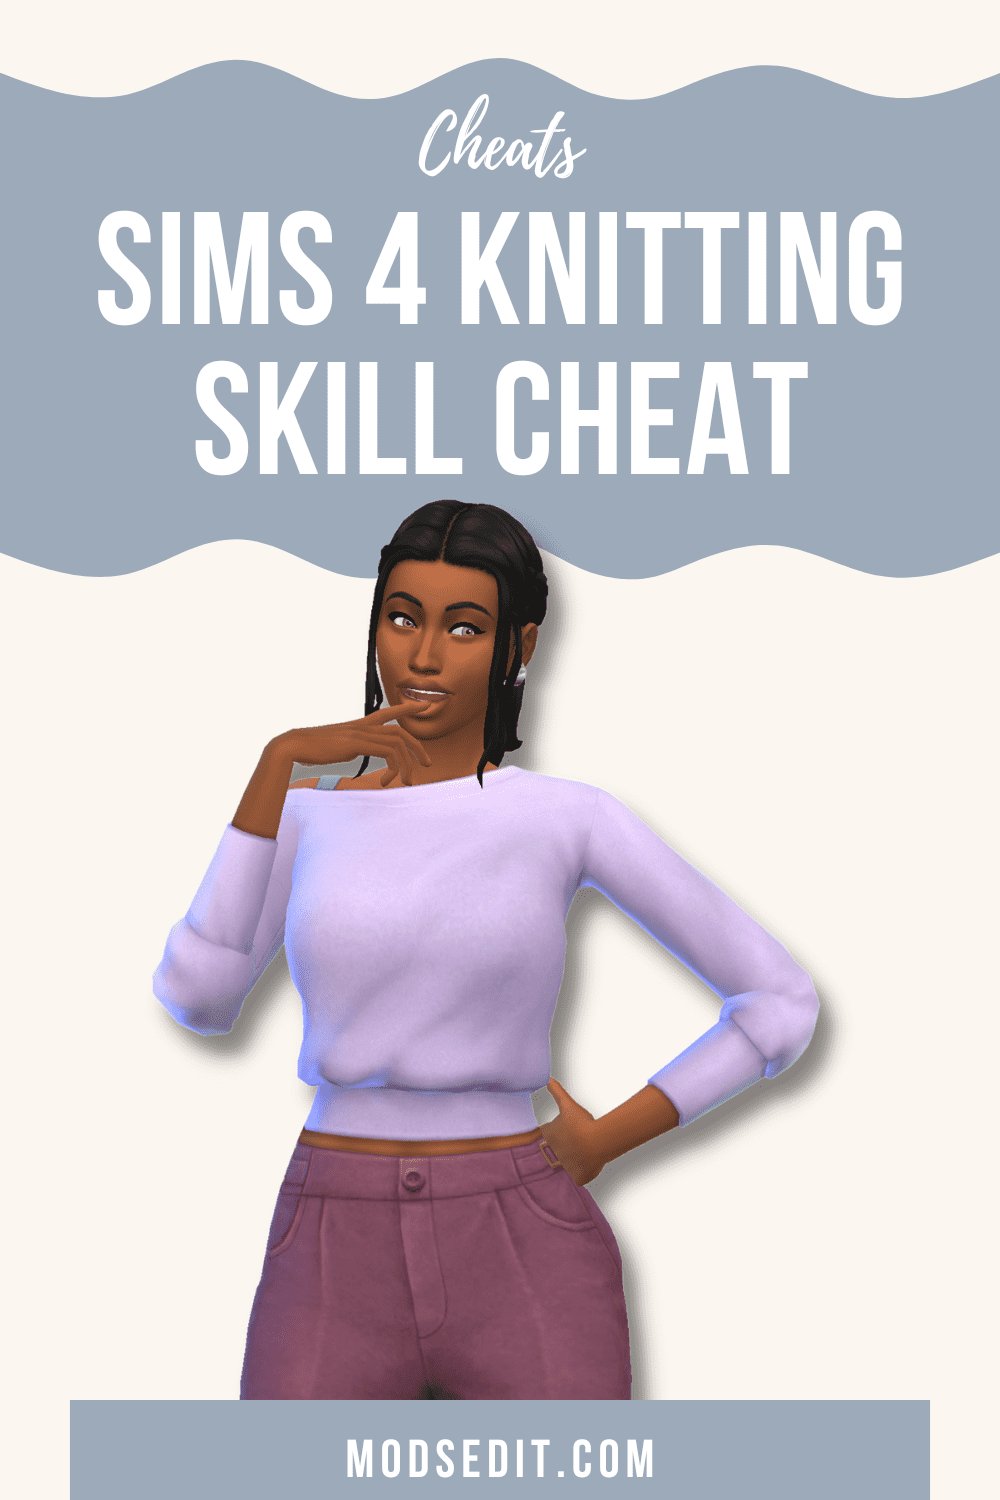 Sims 4 knitting Skill Cheat